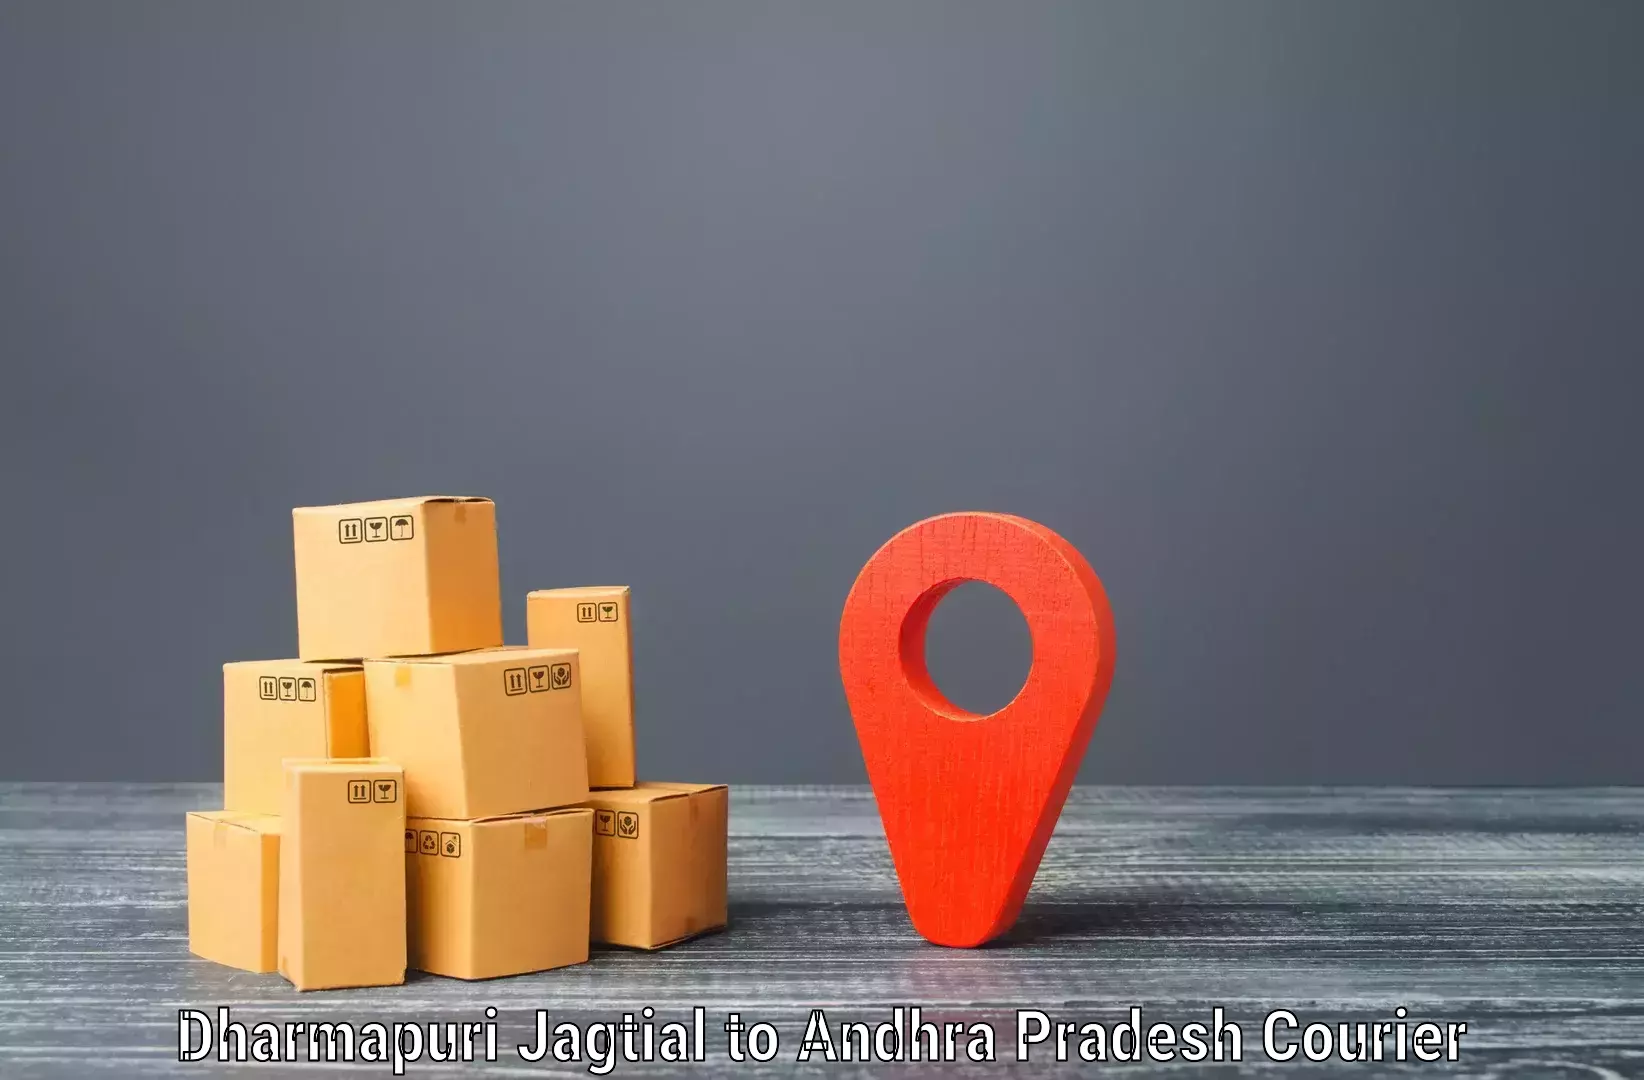 Smart shipping technology Dharmapuri Jagtial to Kandukur